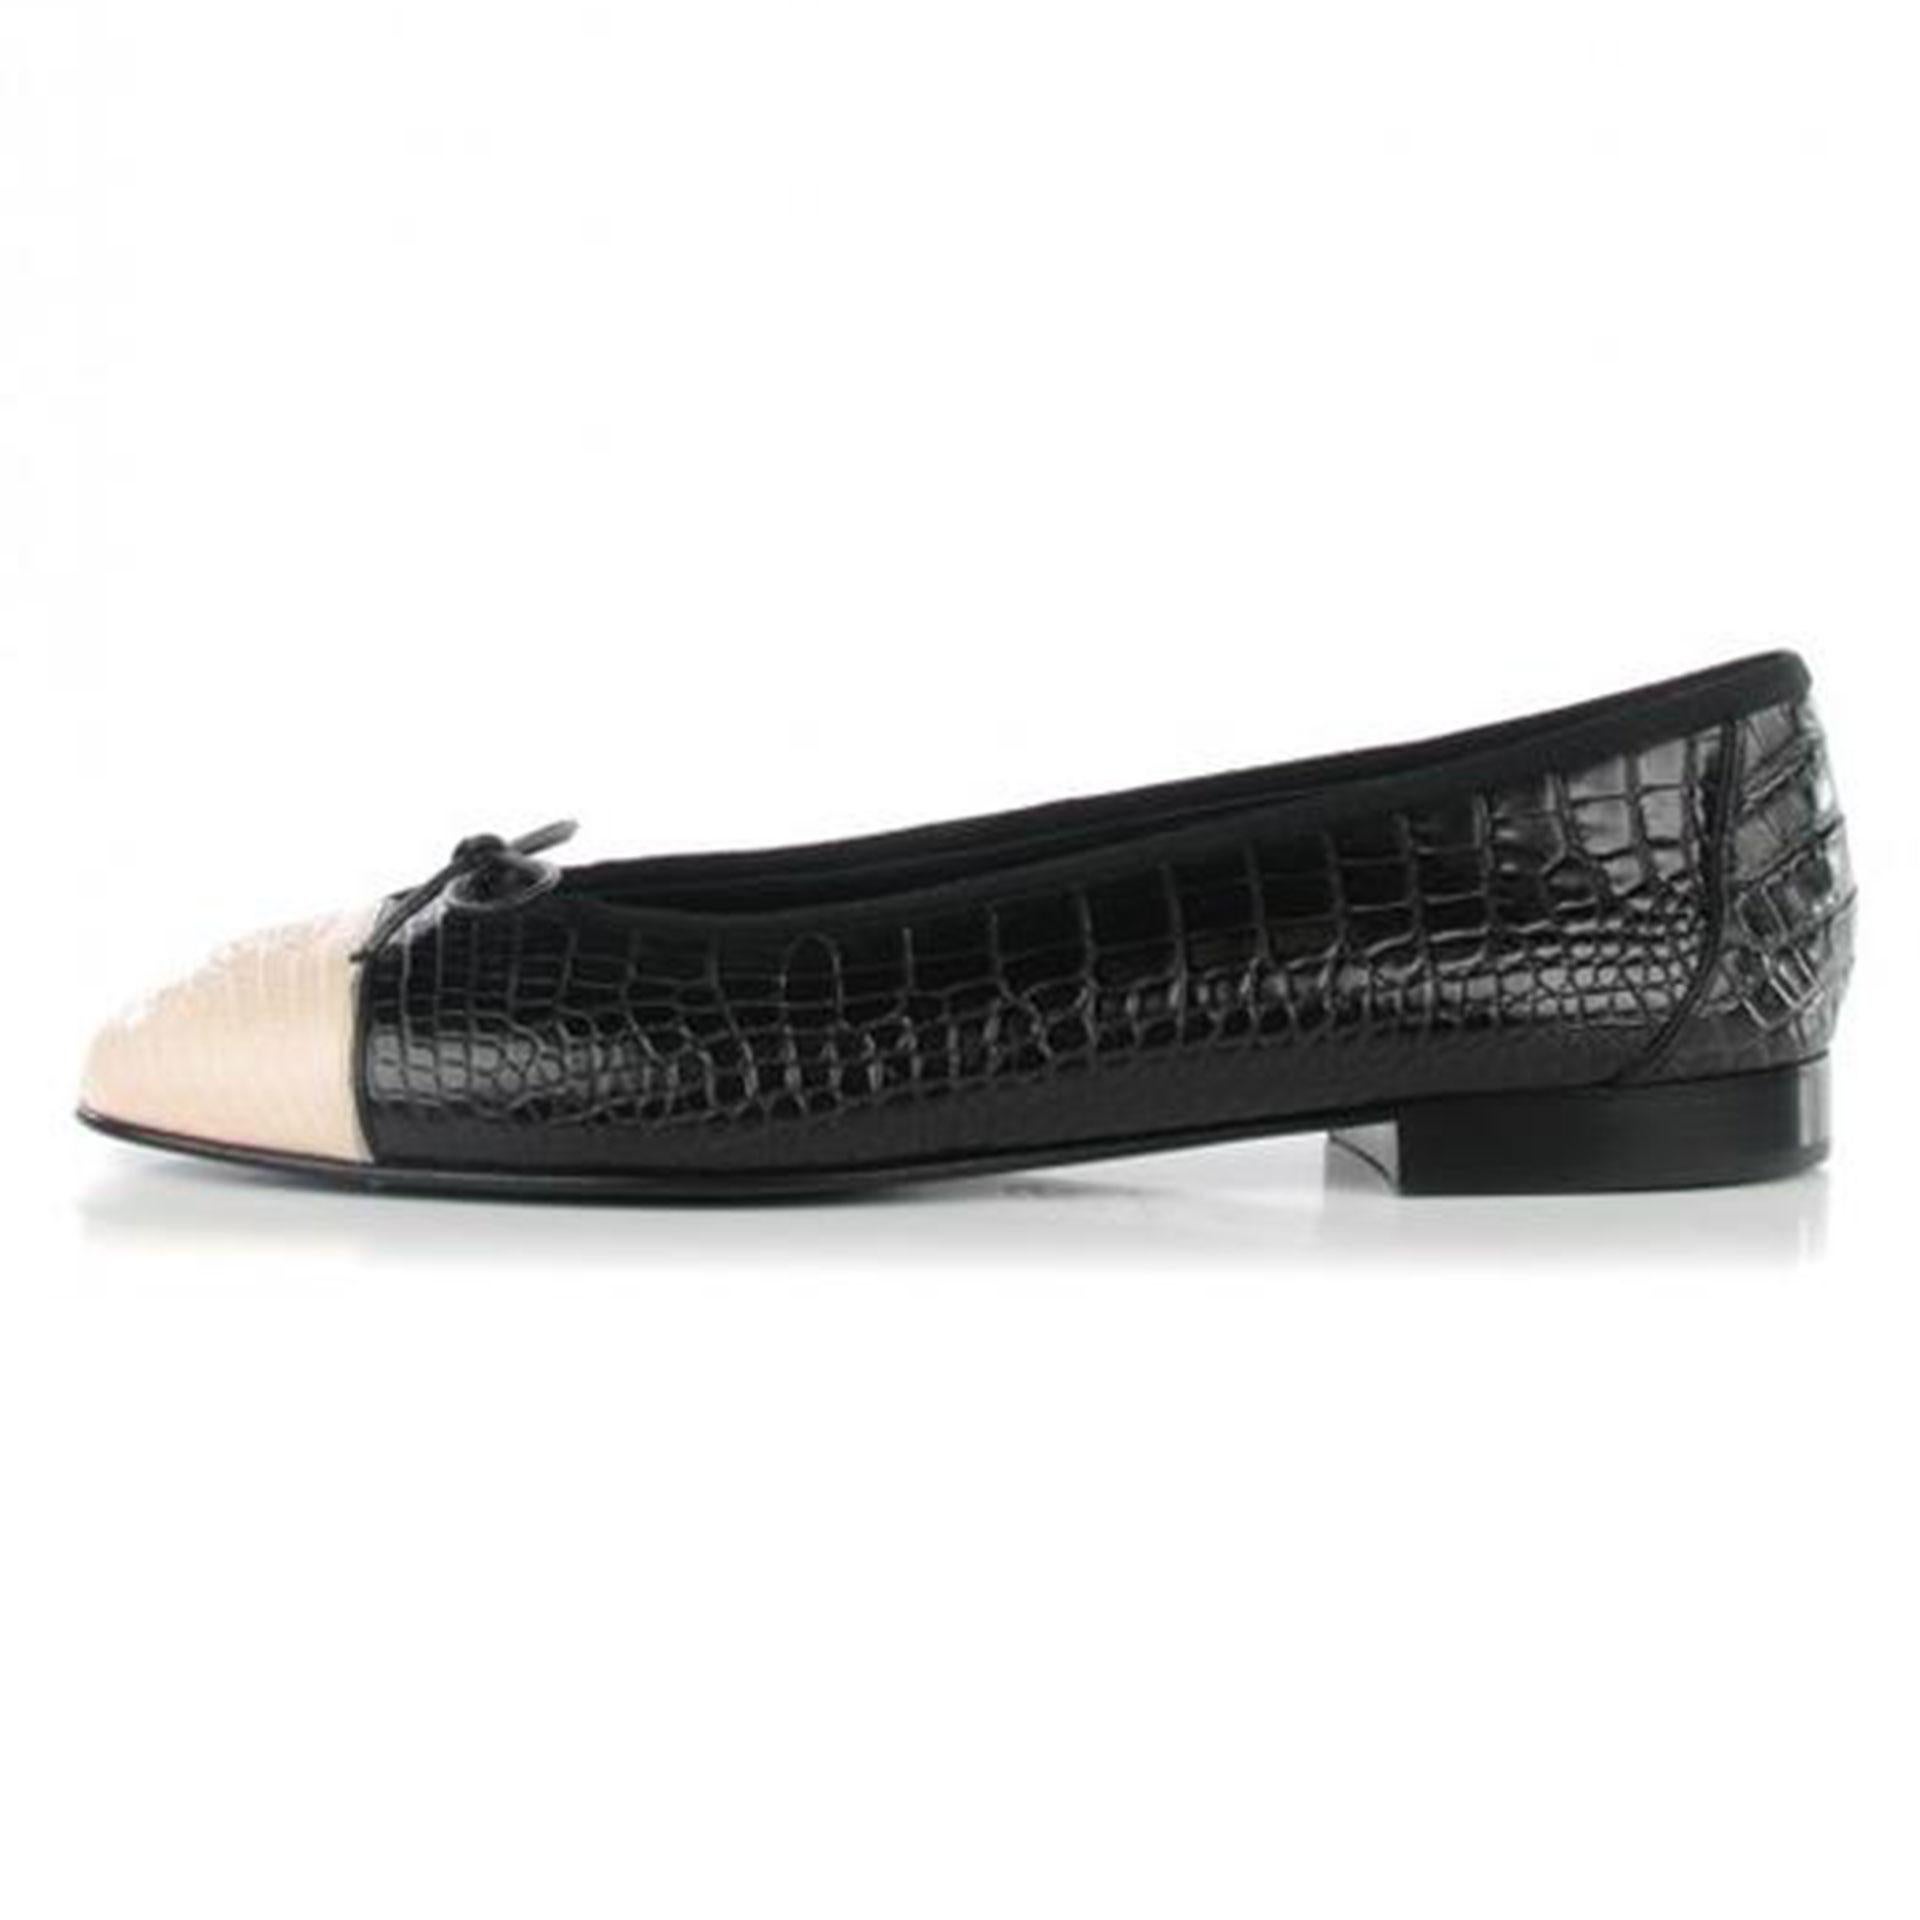 Chanel Black and White Limited Edition & Crocodile Alligator Ballet 39.5 Flats In Good Condition For Sale In Miami, FL